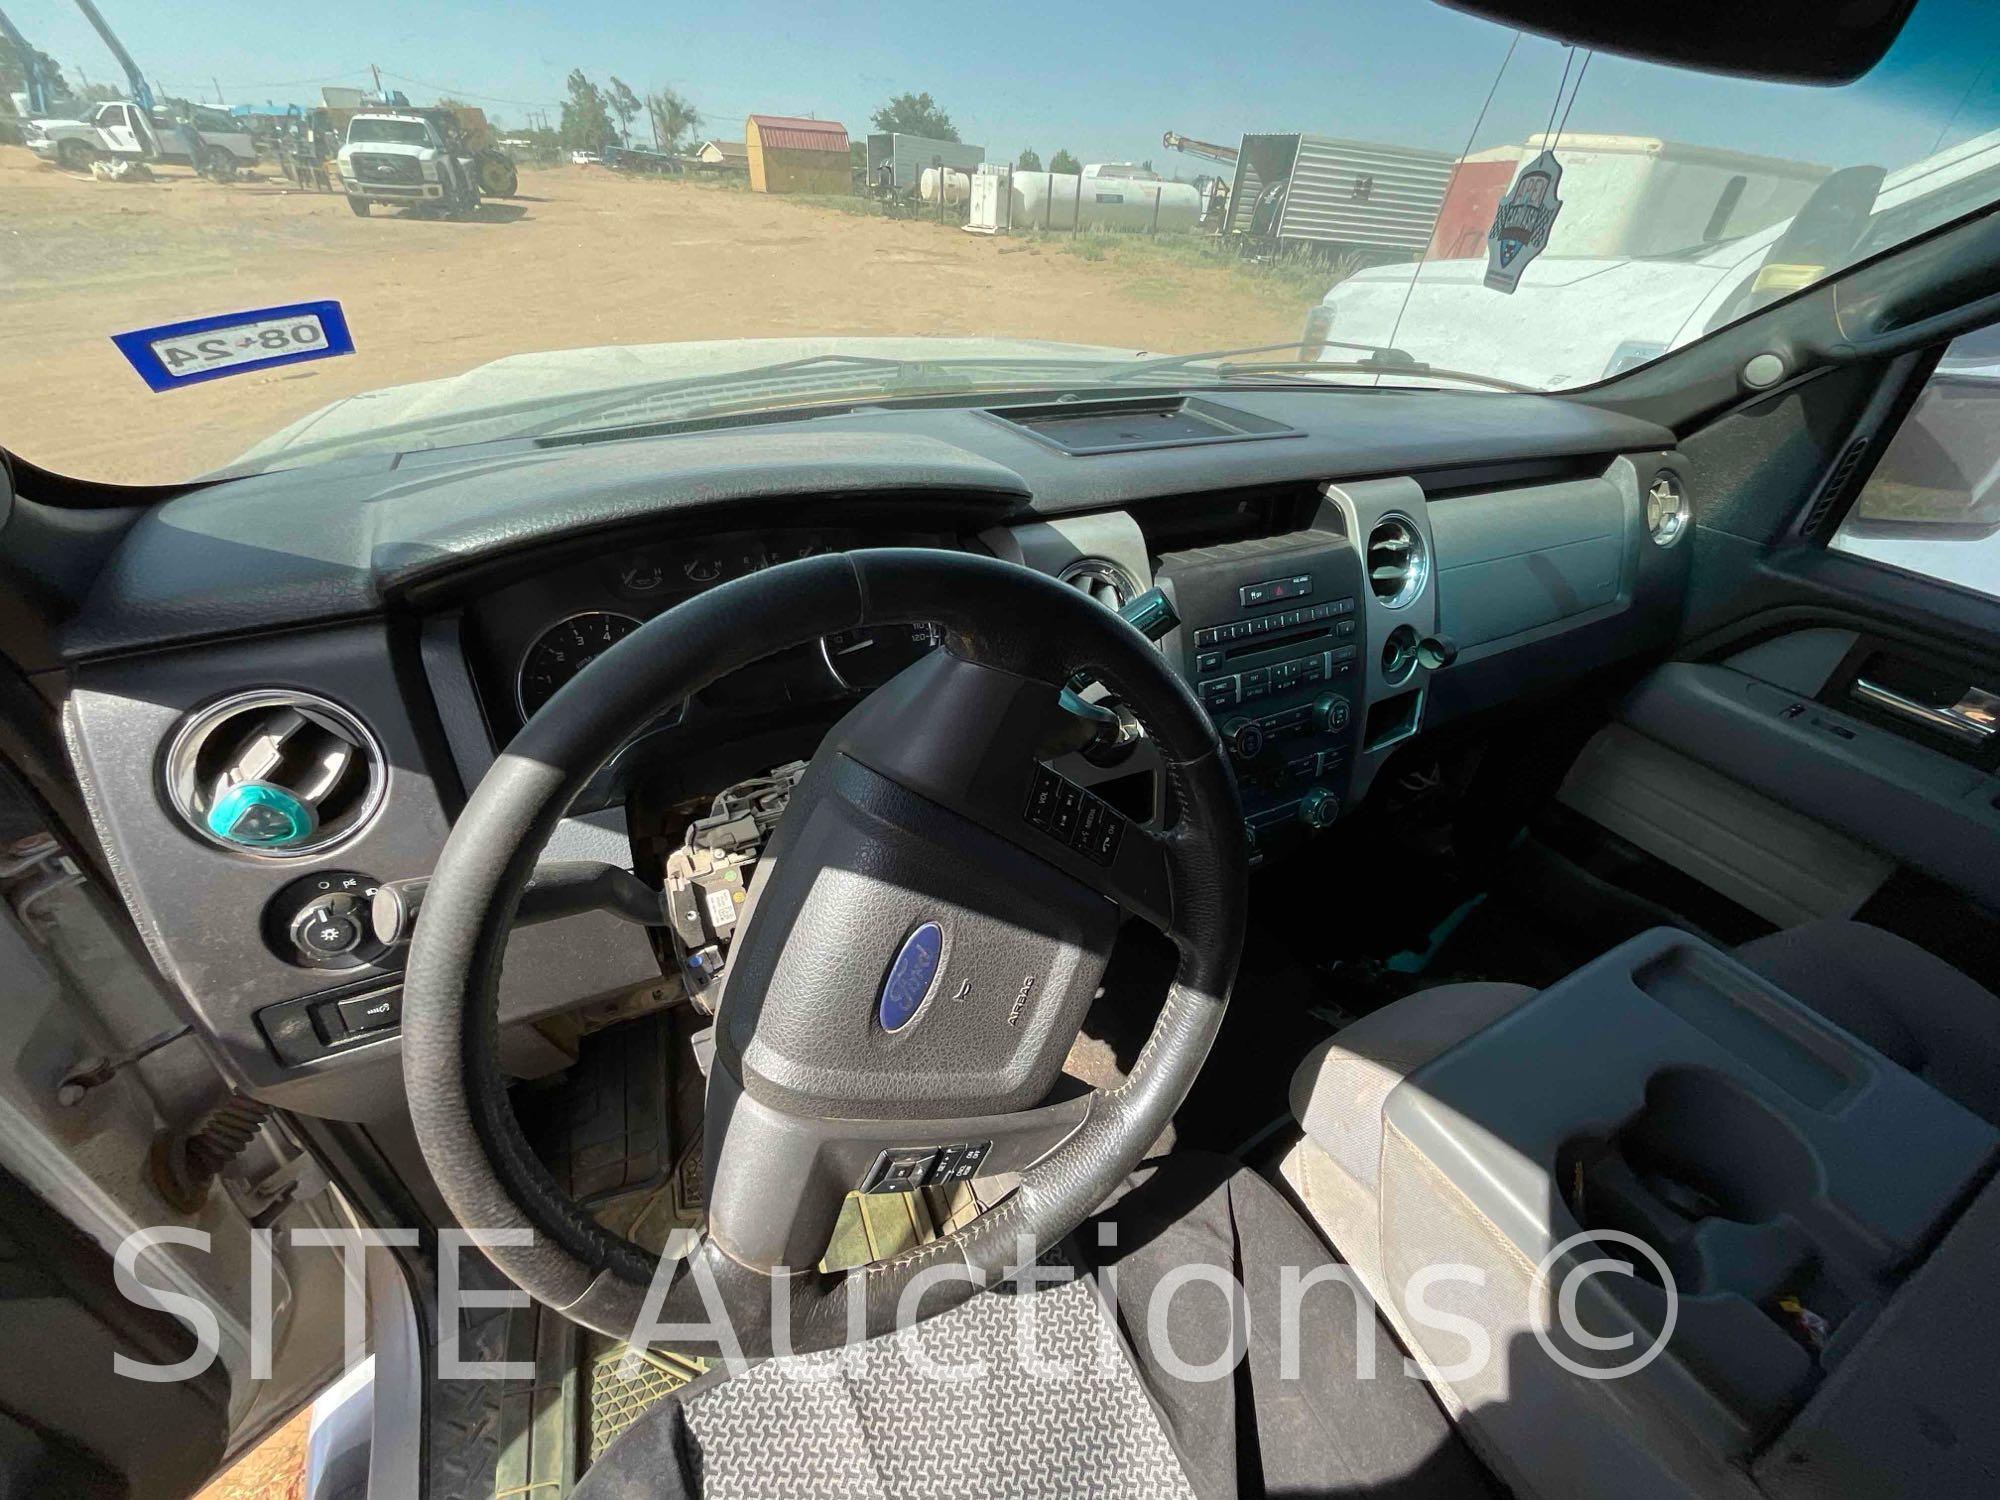 2012 Ford F150 Crew Cab Pickup Truck